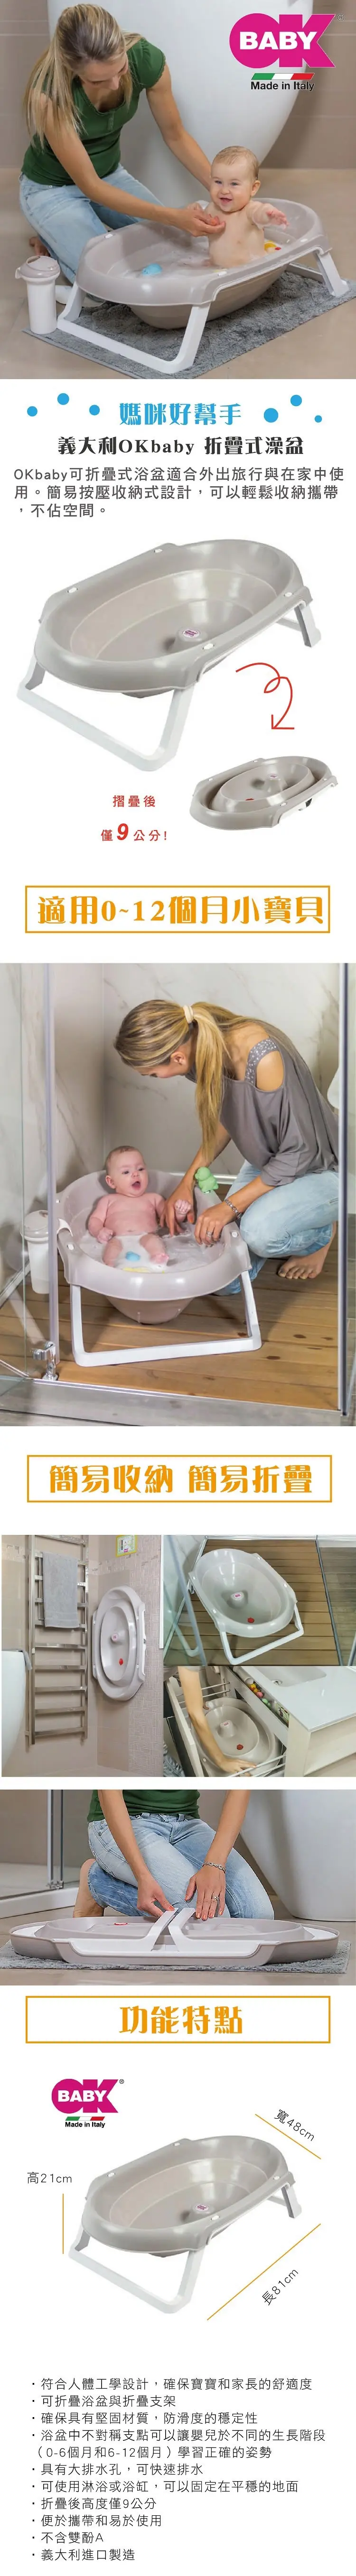 OKBABY 折叠式婴儿浴盆